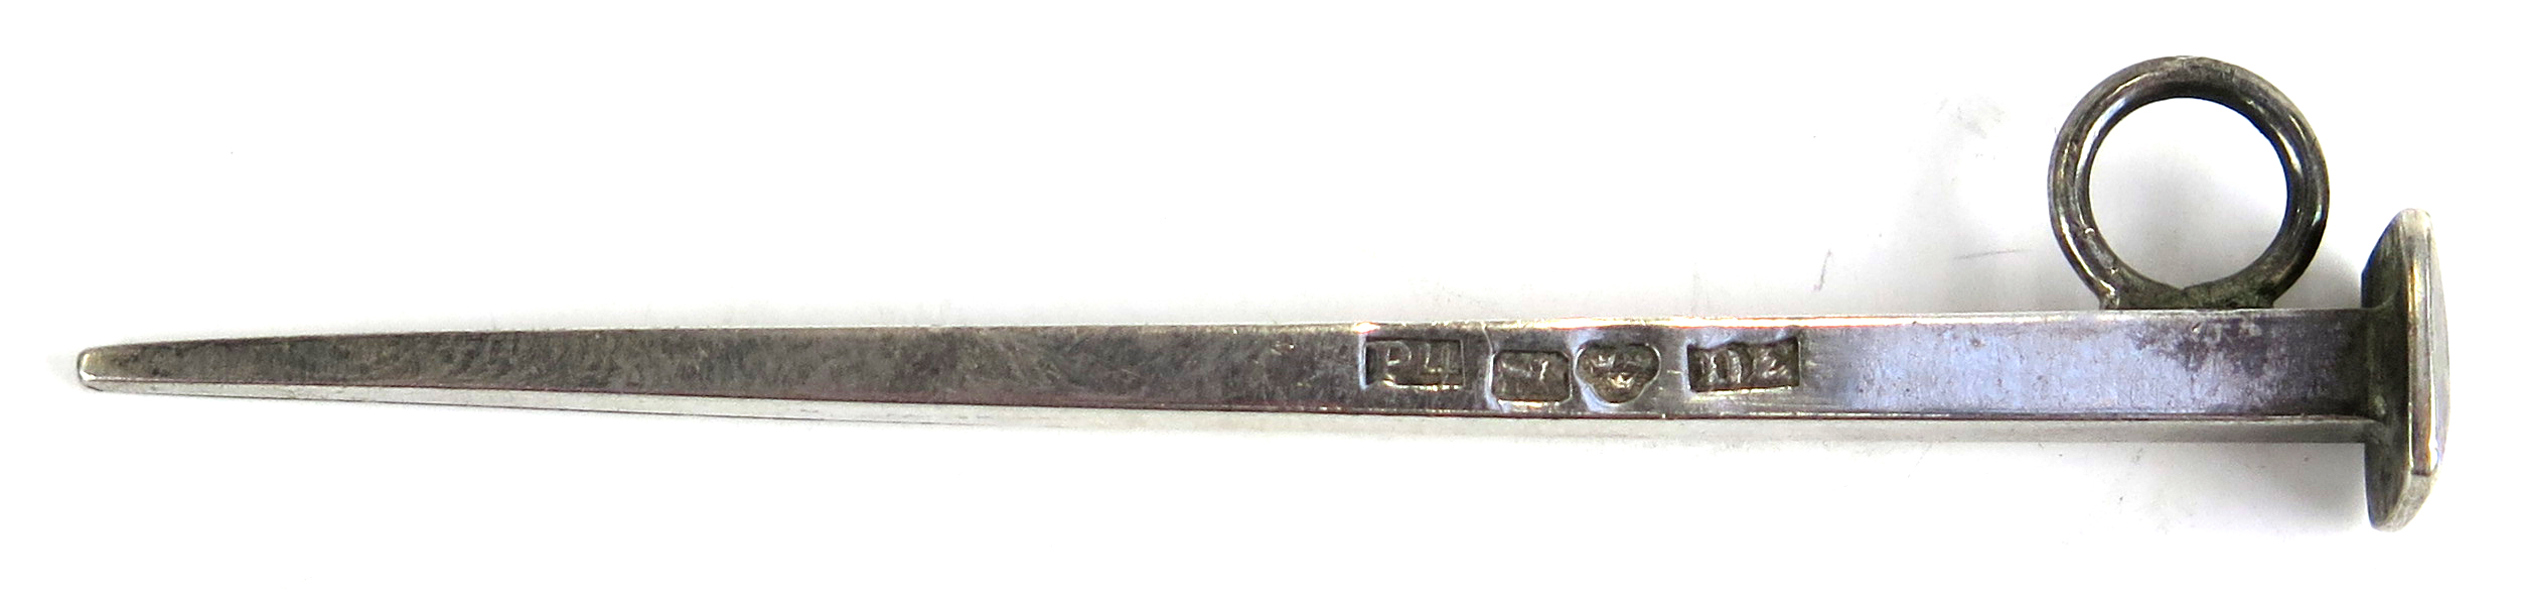 Pipstoppare/krats, silver, 1800-talets 1 hälft, konisk med ögla, stämplad Daniel Ekelund Kalmar 1845, l 7,5 cm_25647a_8dafed95674c85f_lg.jpeg